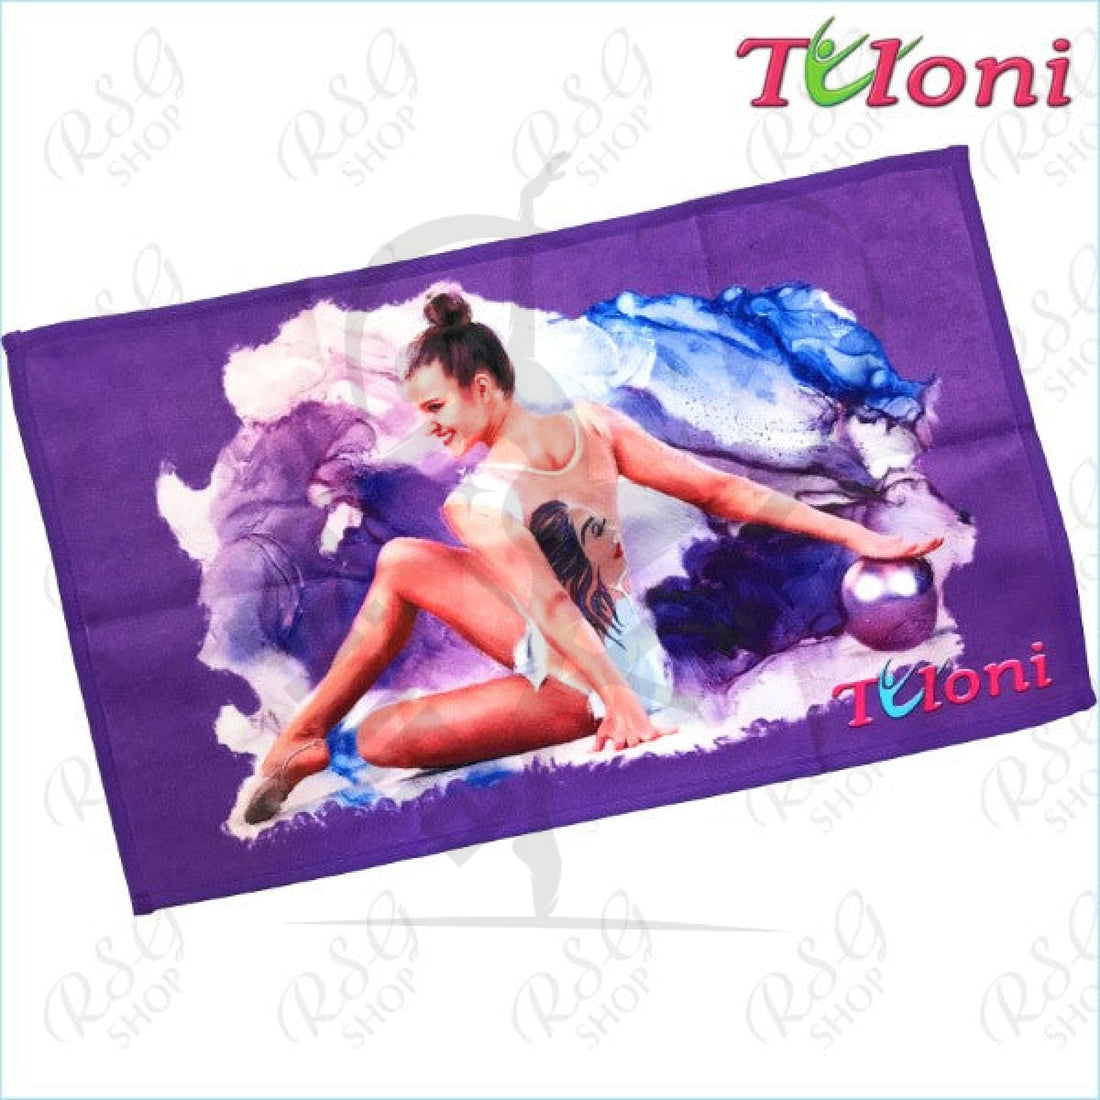 Tuloni Hand Towel Violet Accessories